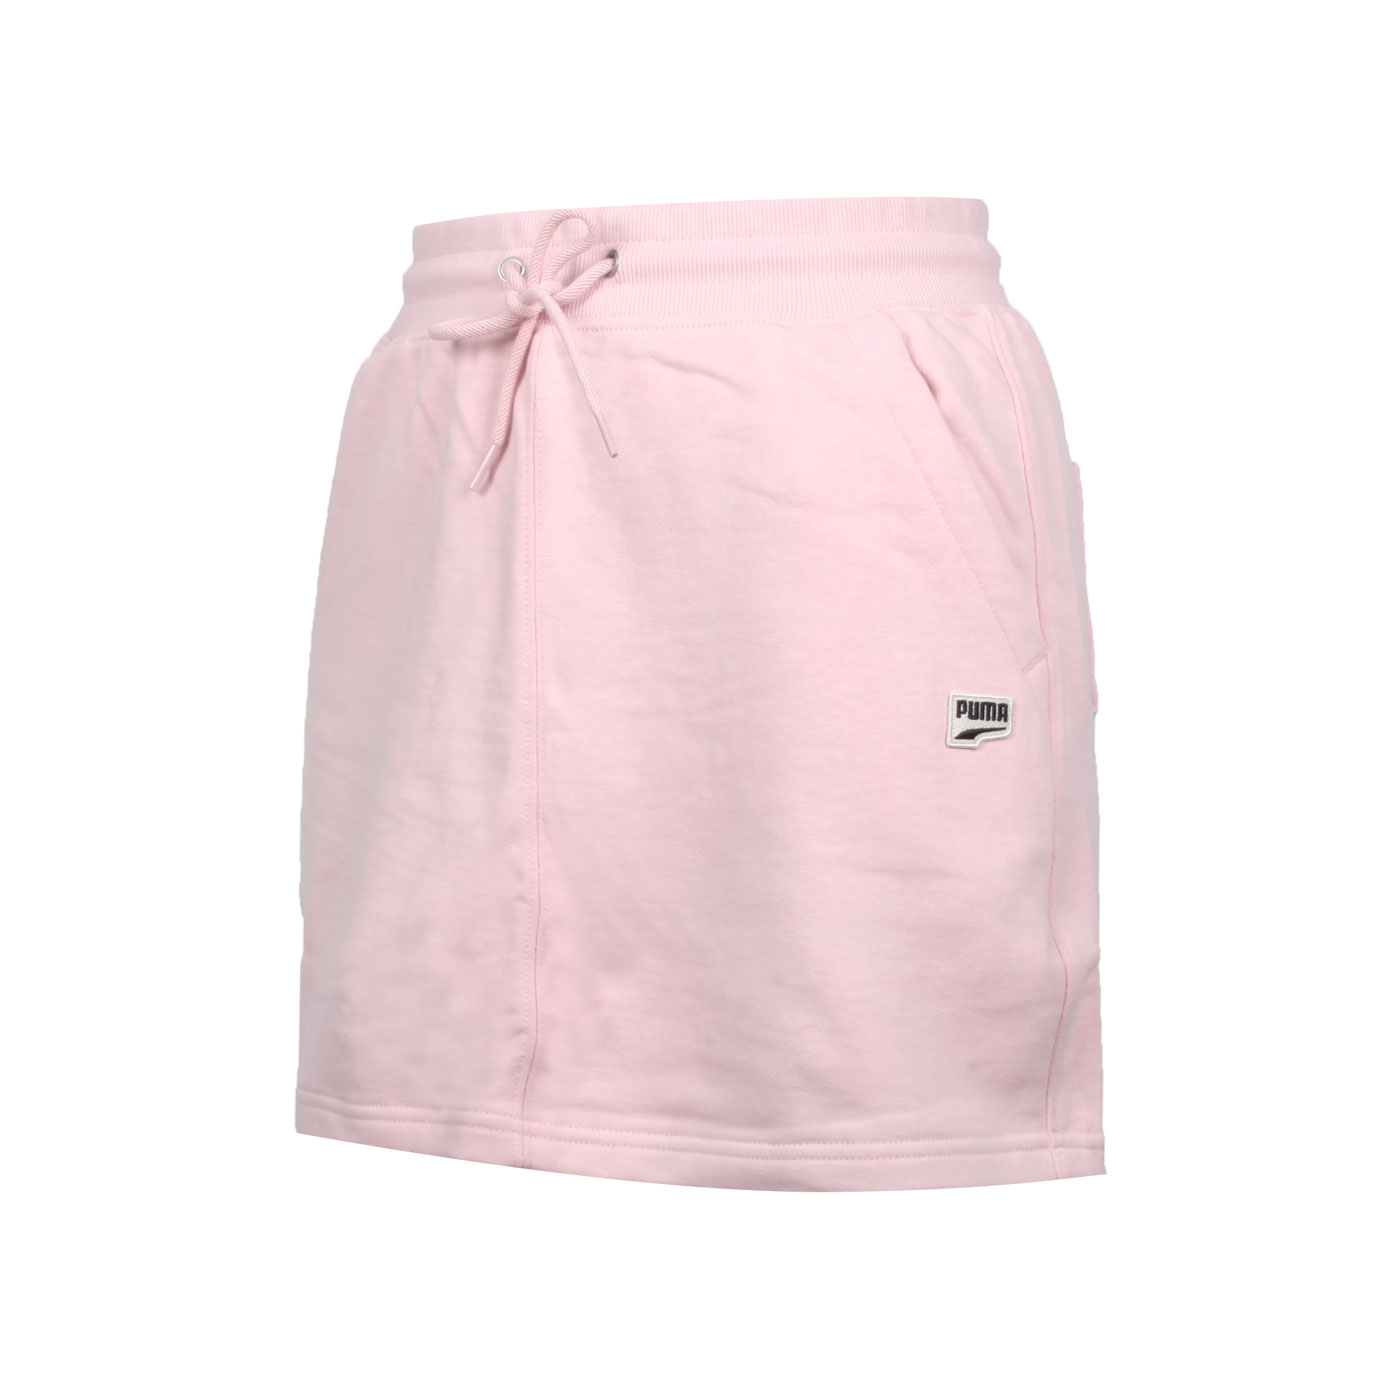 PUMA 女款流行系列Downtown短裙 53169436 - 粉紅黑